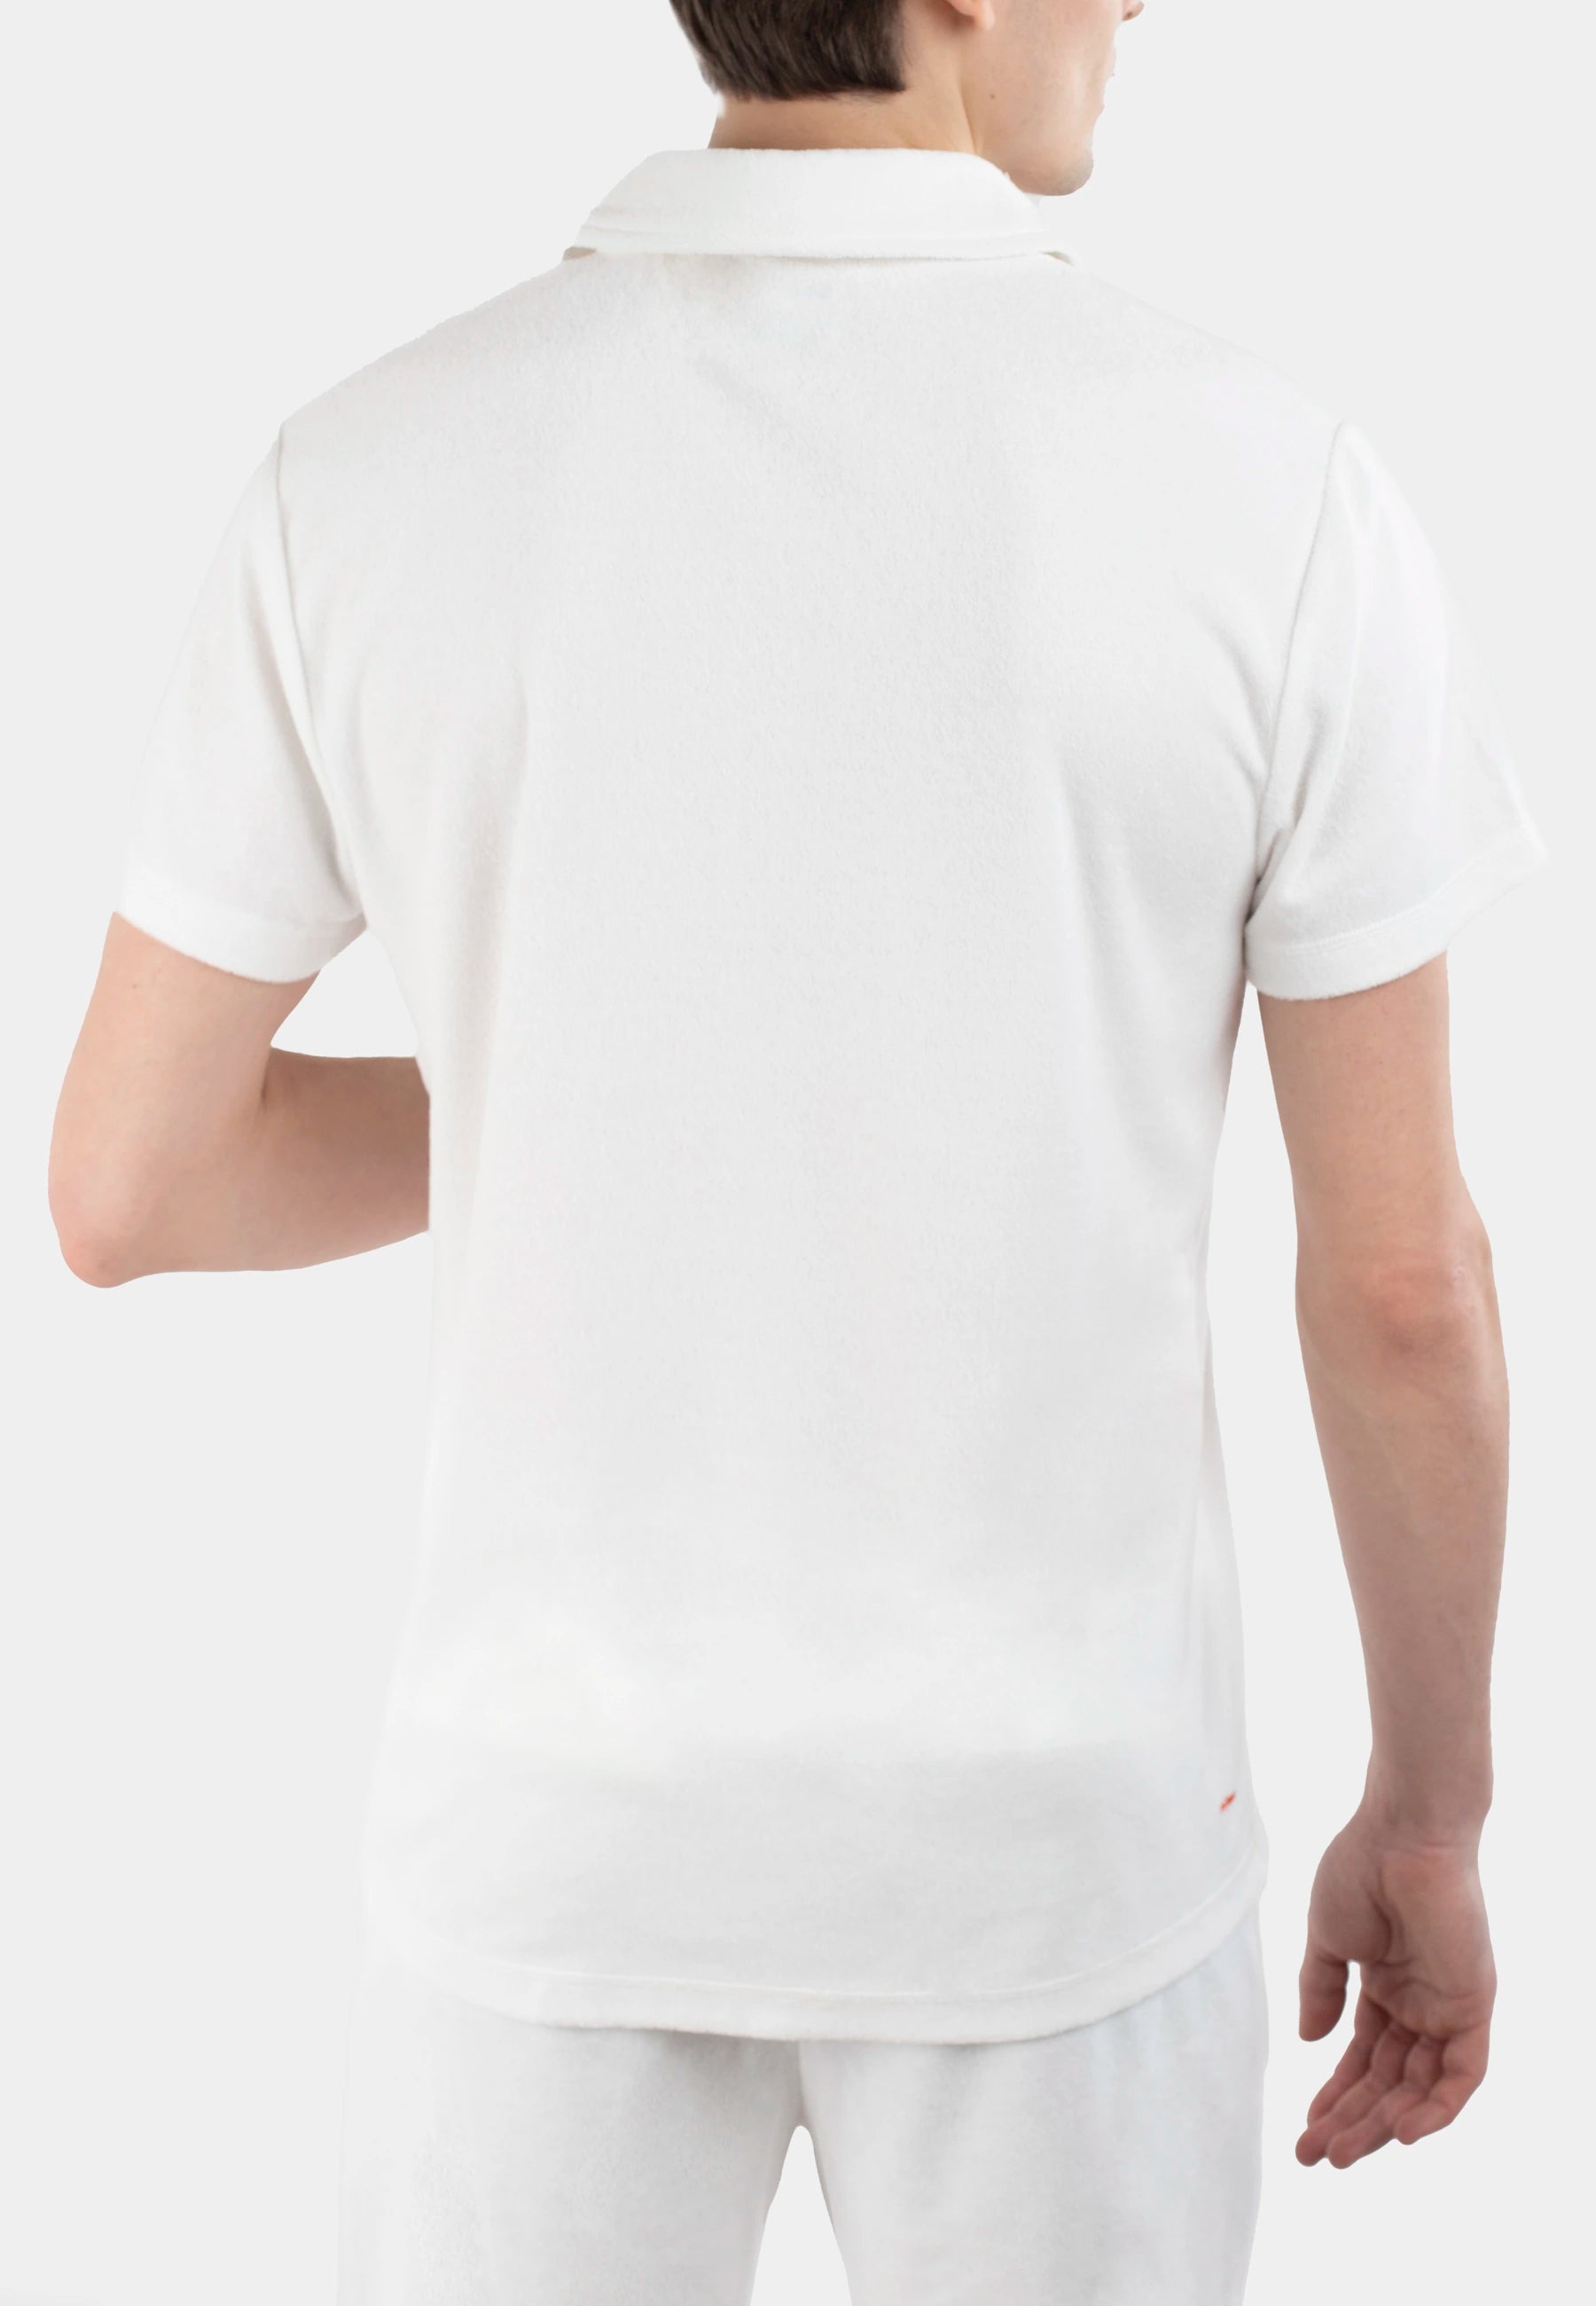 Cay terry half zip shirt - Off white